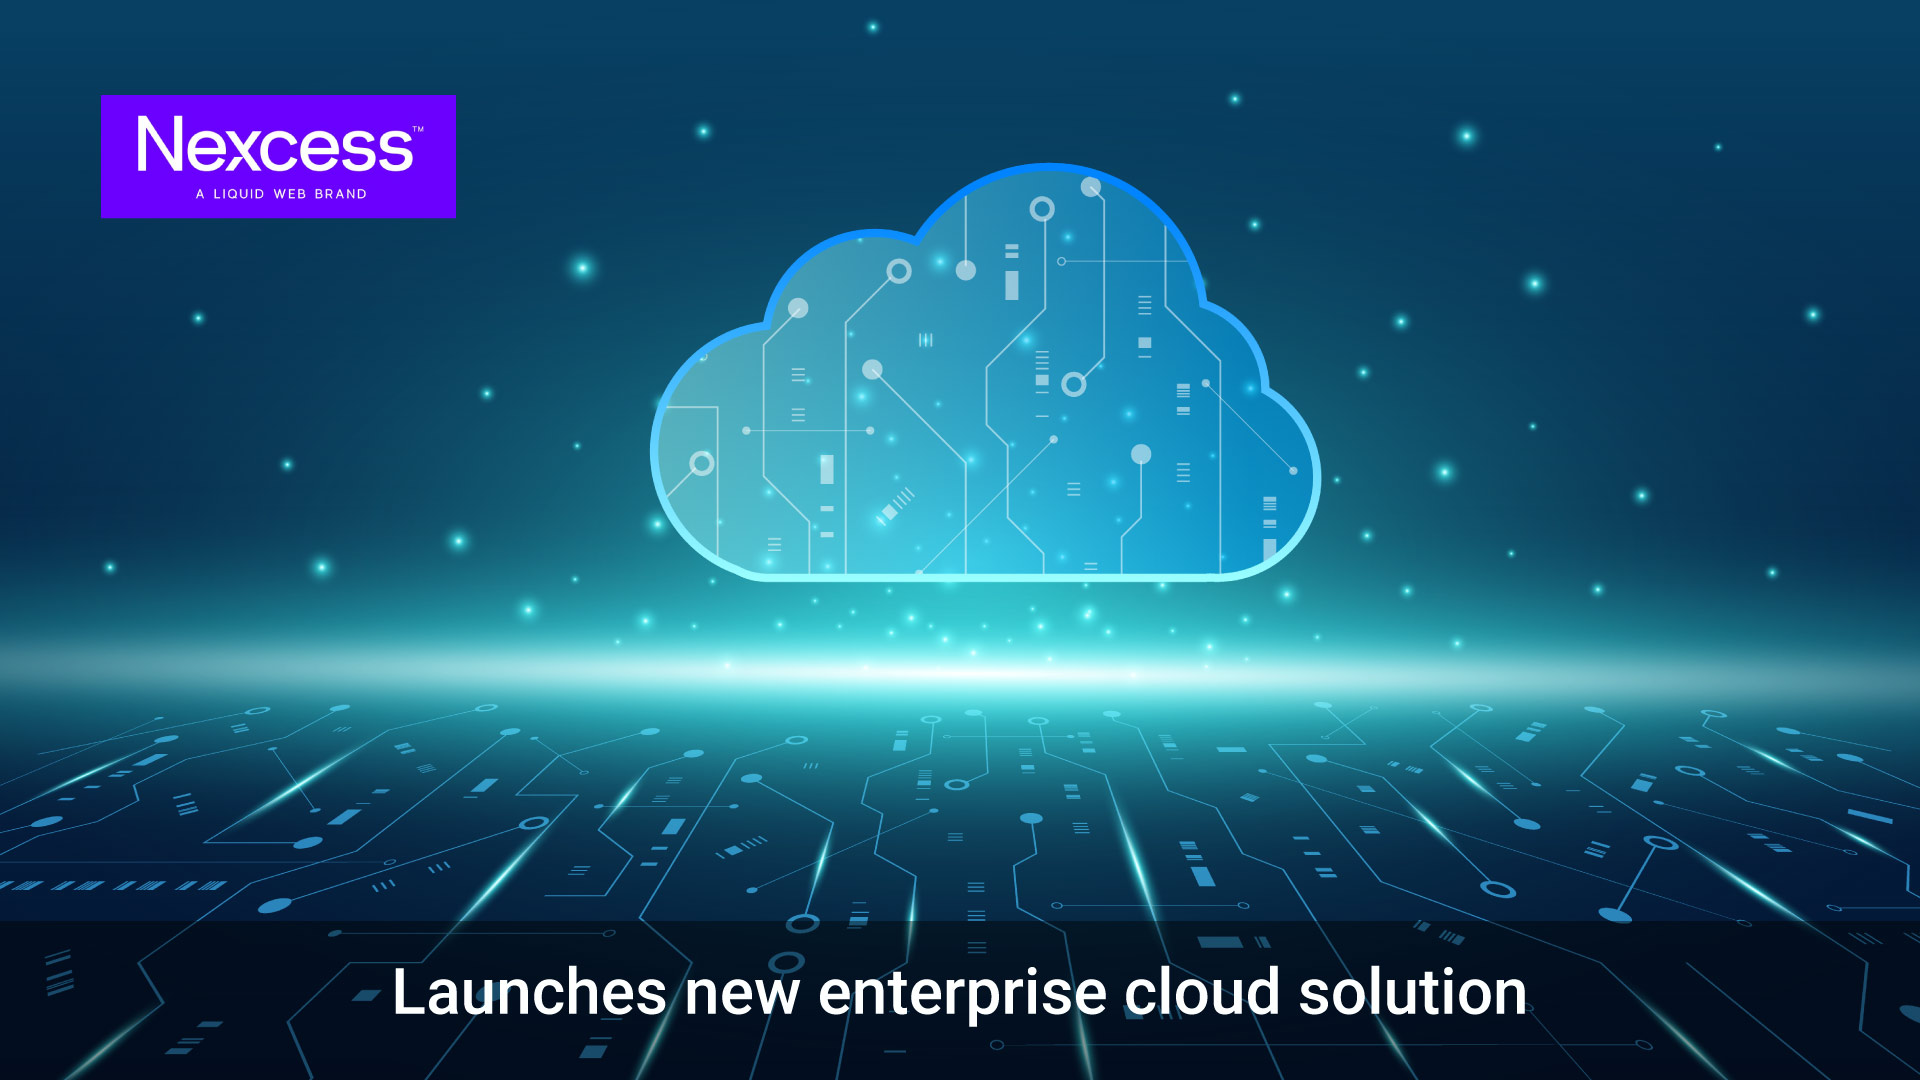 Nexcess launches new enterprise cloud solution for better scalability, flexibility